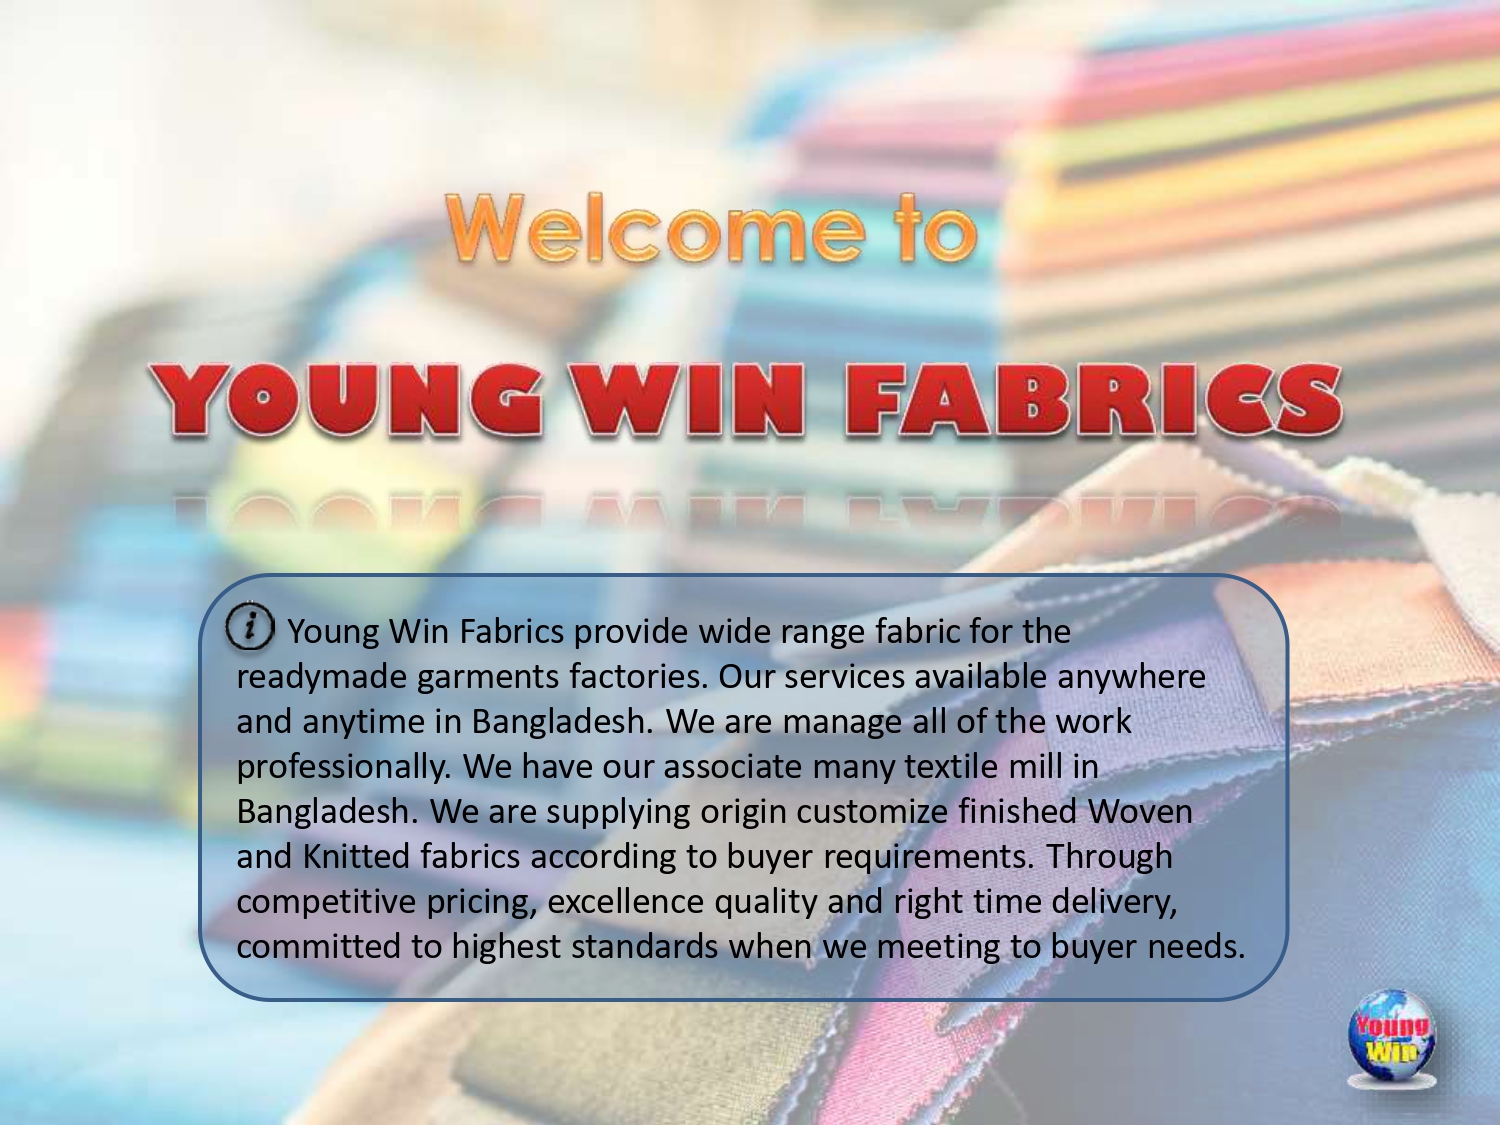 Young Win Fabrics Profile page 0001 micro fiber fabrics